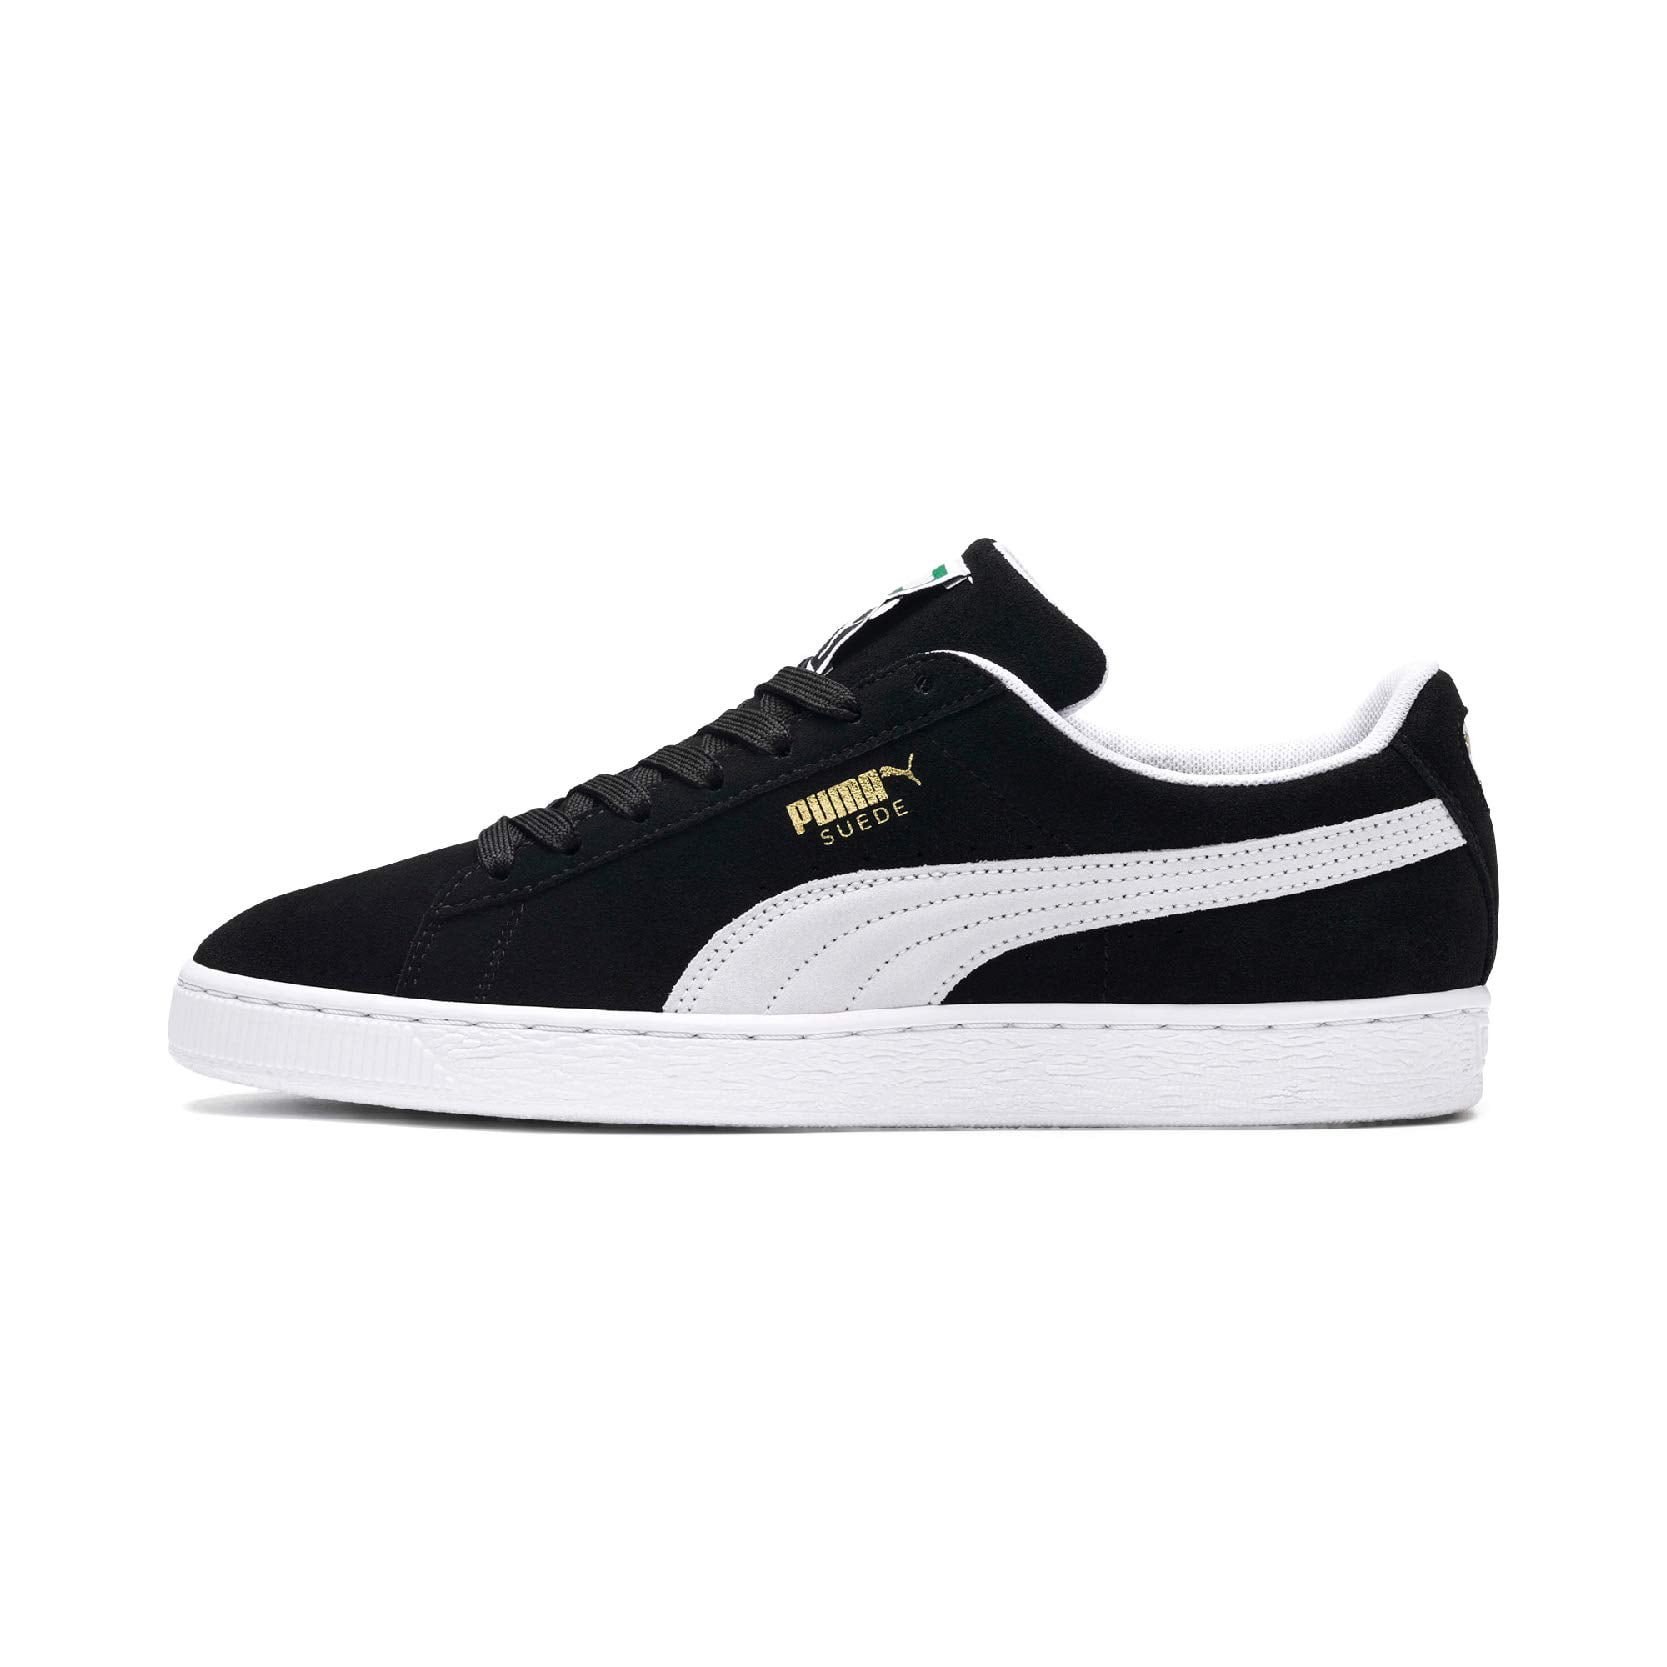 Puma Suede Sneakers Black - Walmart.com